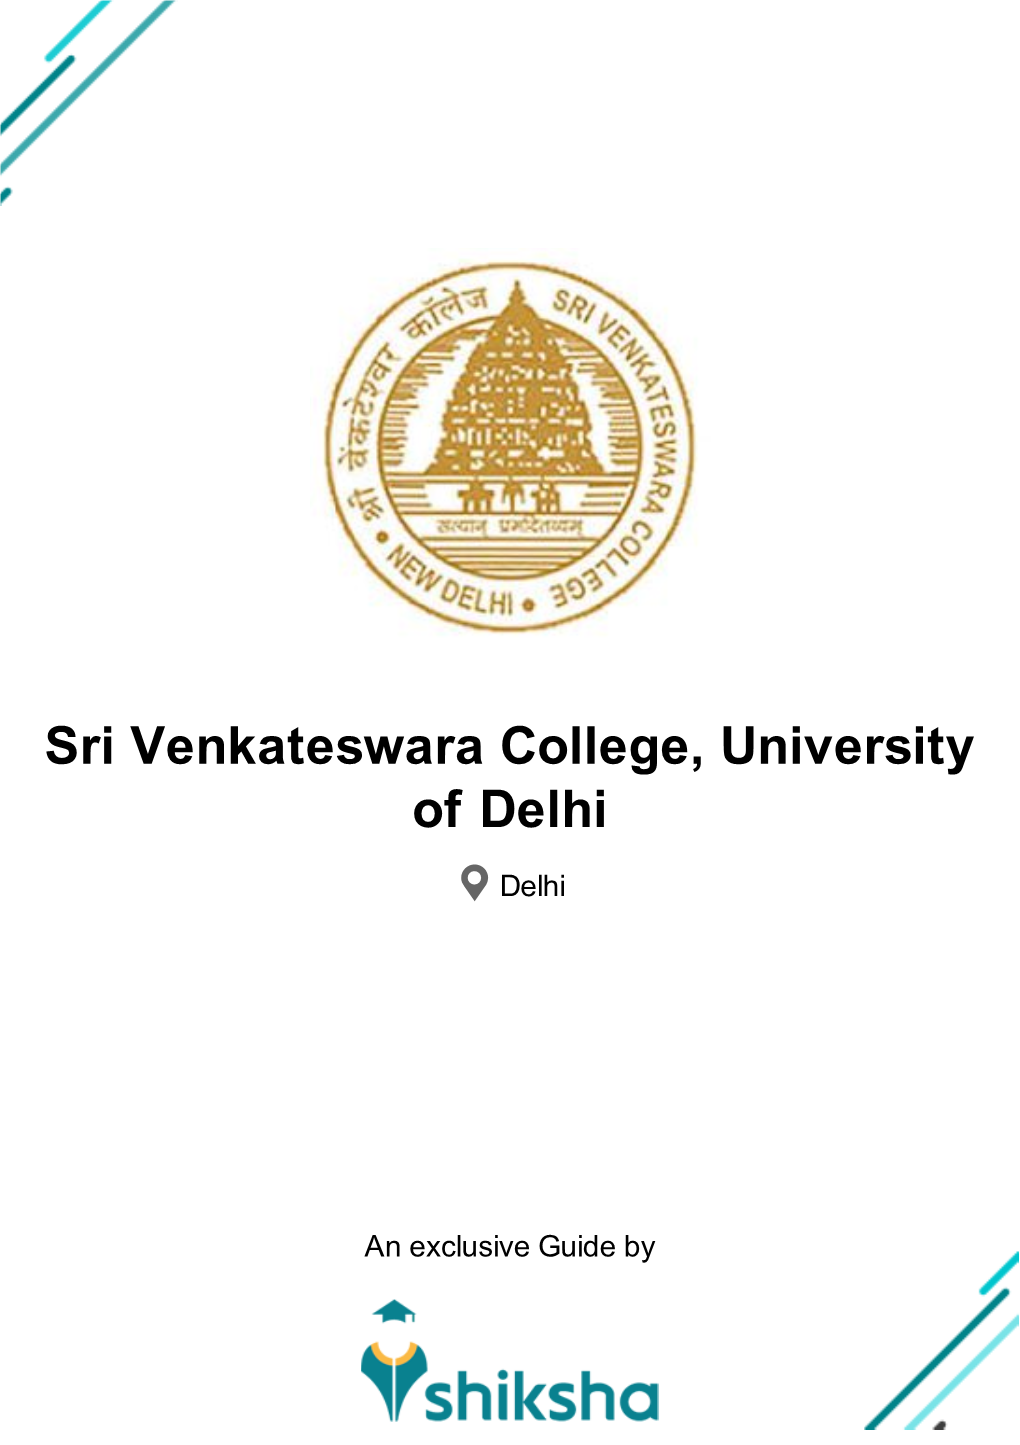 Sri Venkateswara College, University of Delhi